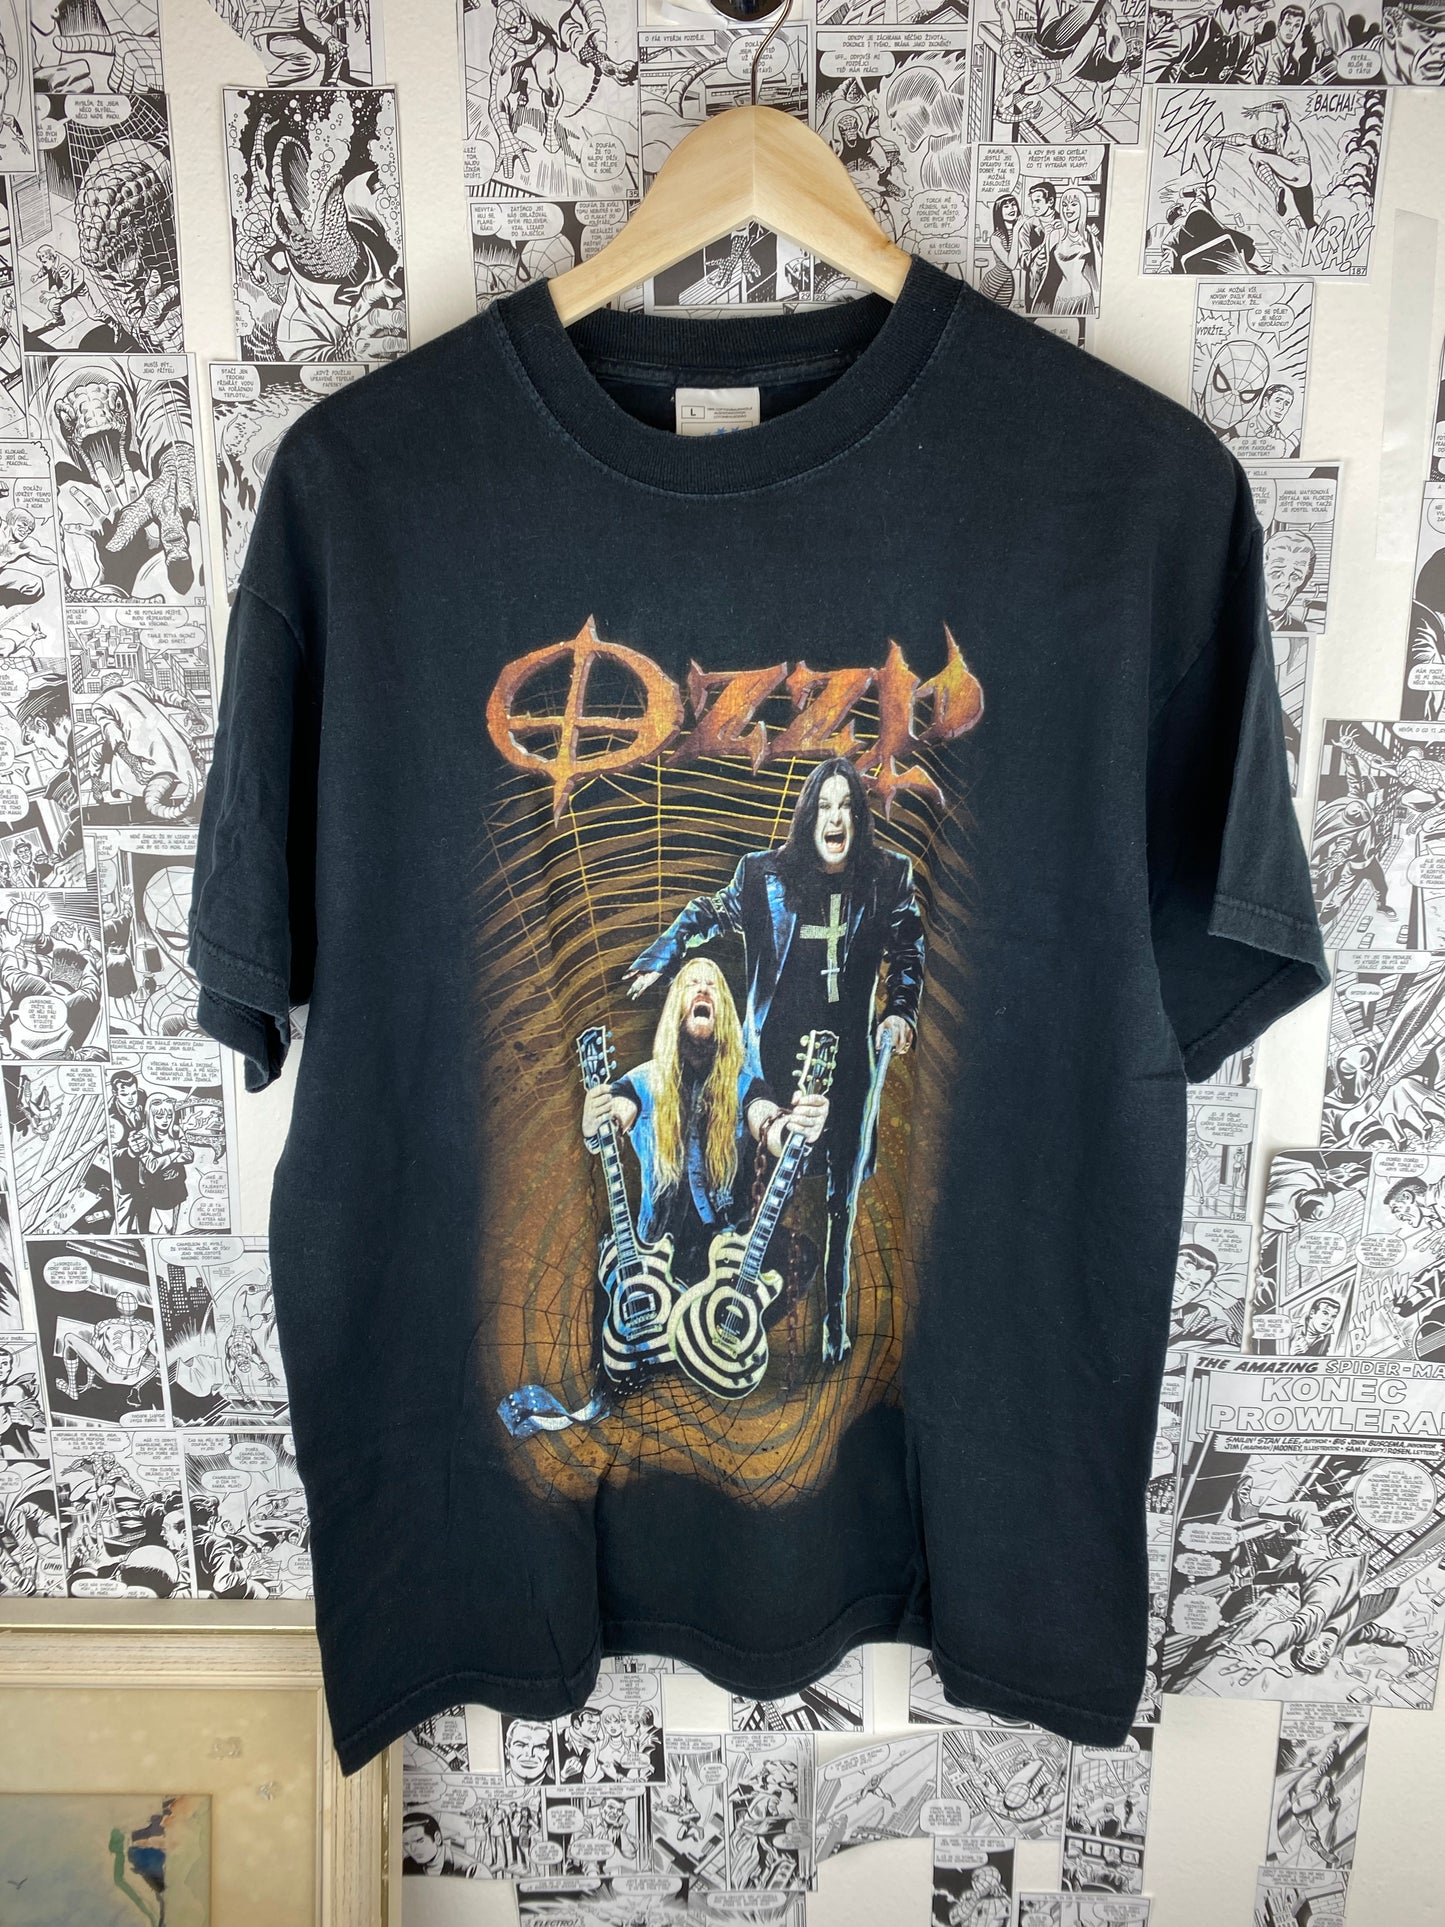 Vintage Ozzy Osbourne 90s t-shirt - size L